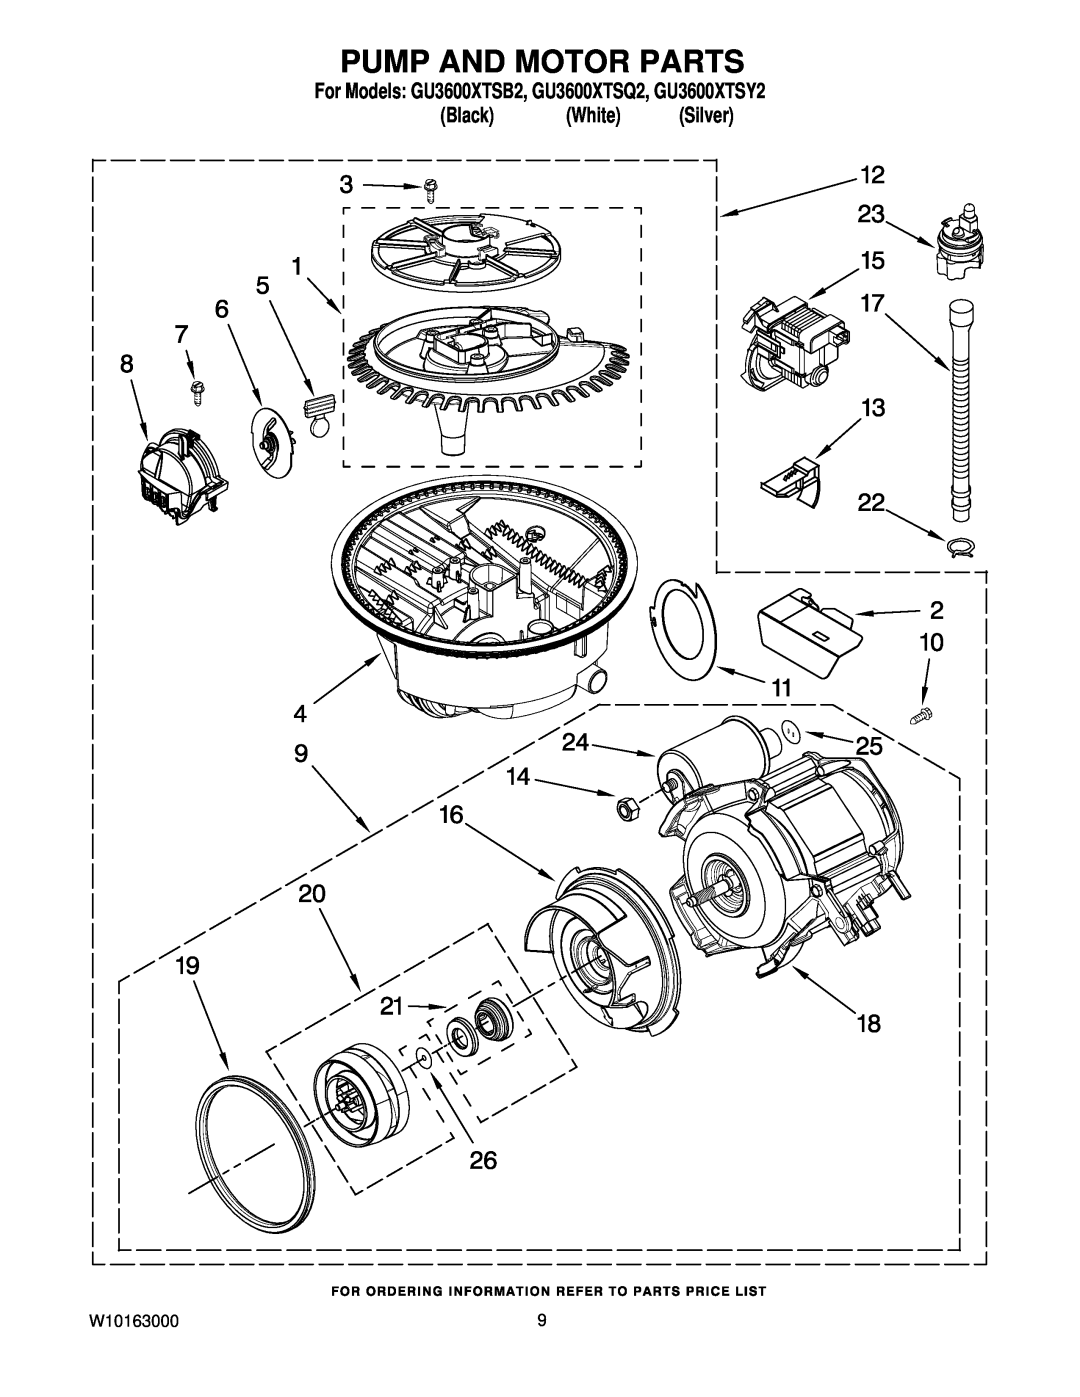 Whirlpool manual Pump And Motor Parts, For Models GU3600XTSB2, GU3600XTSQ2, GU3600XTSY2, Black White Silver 